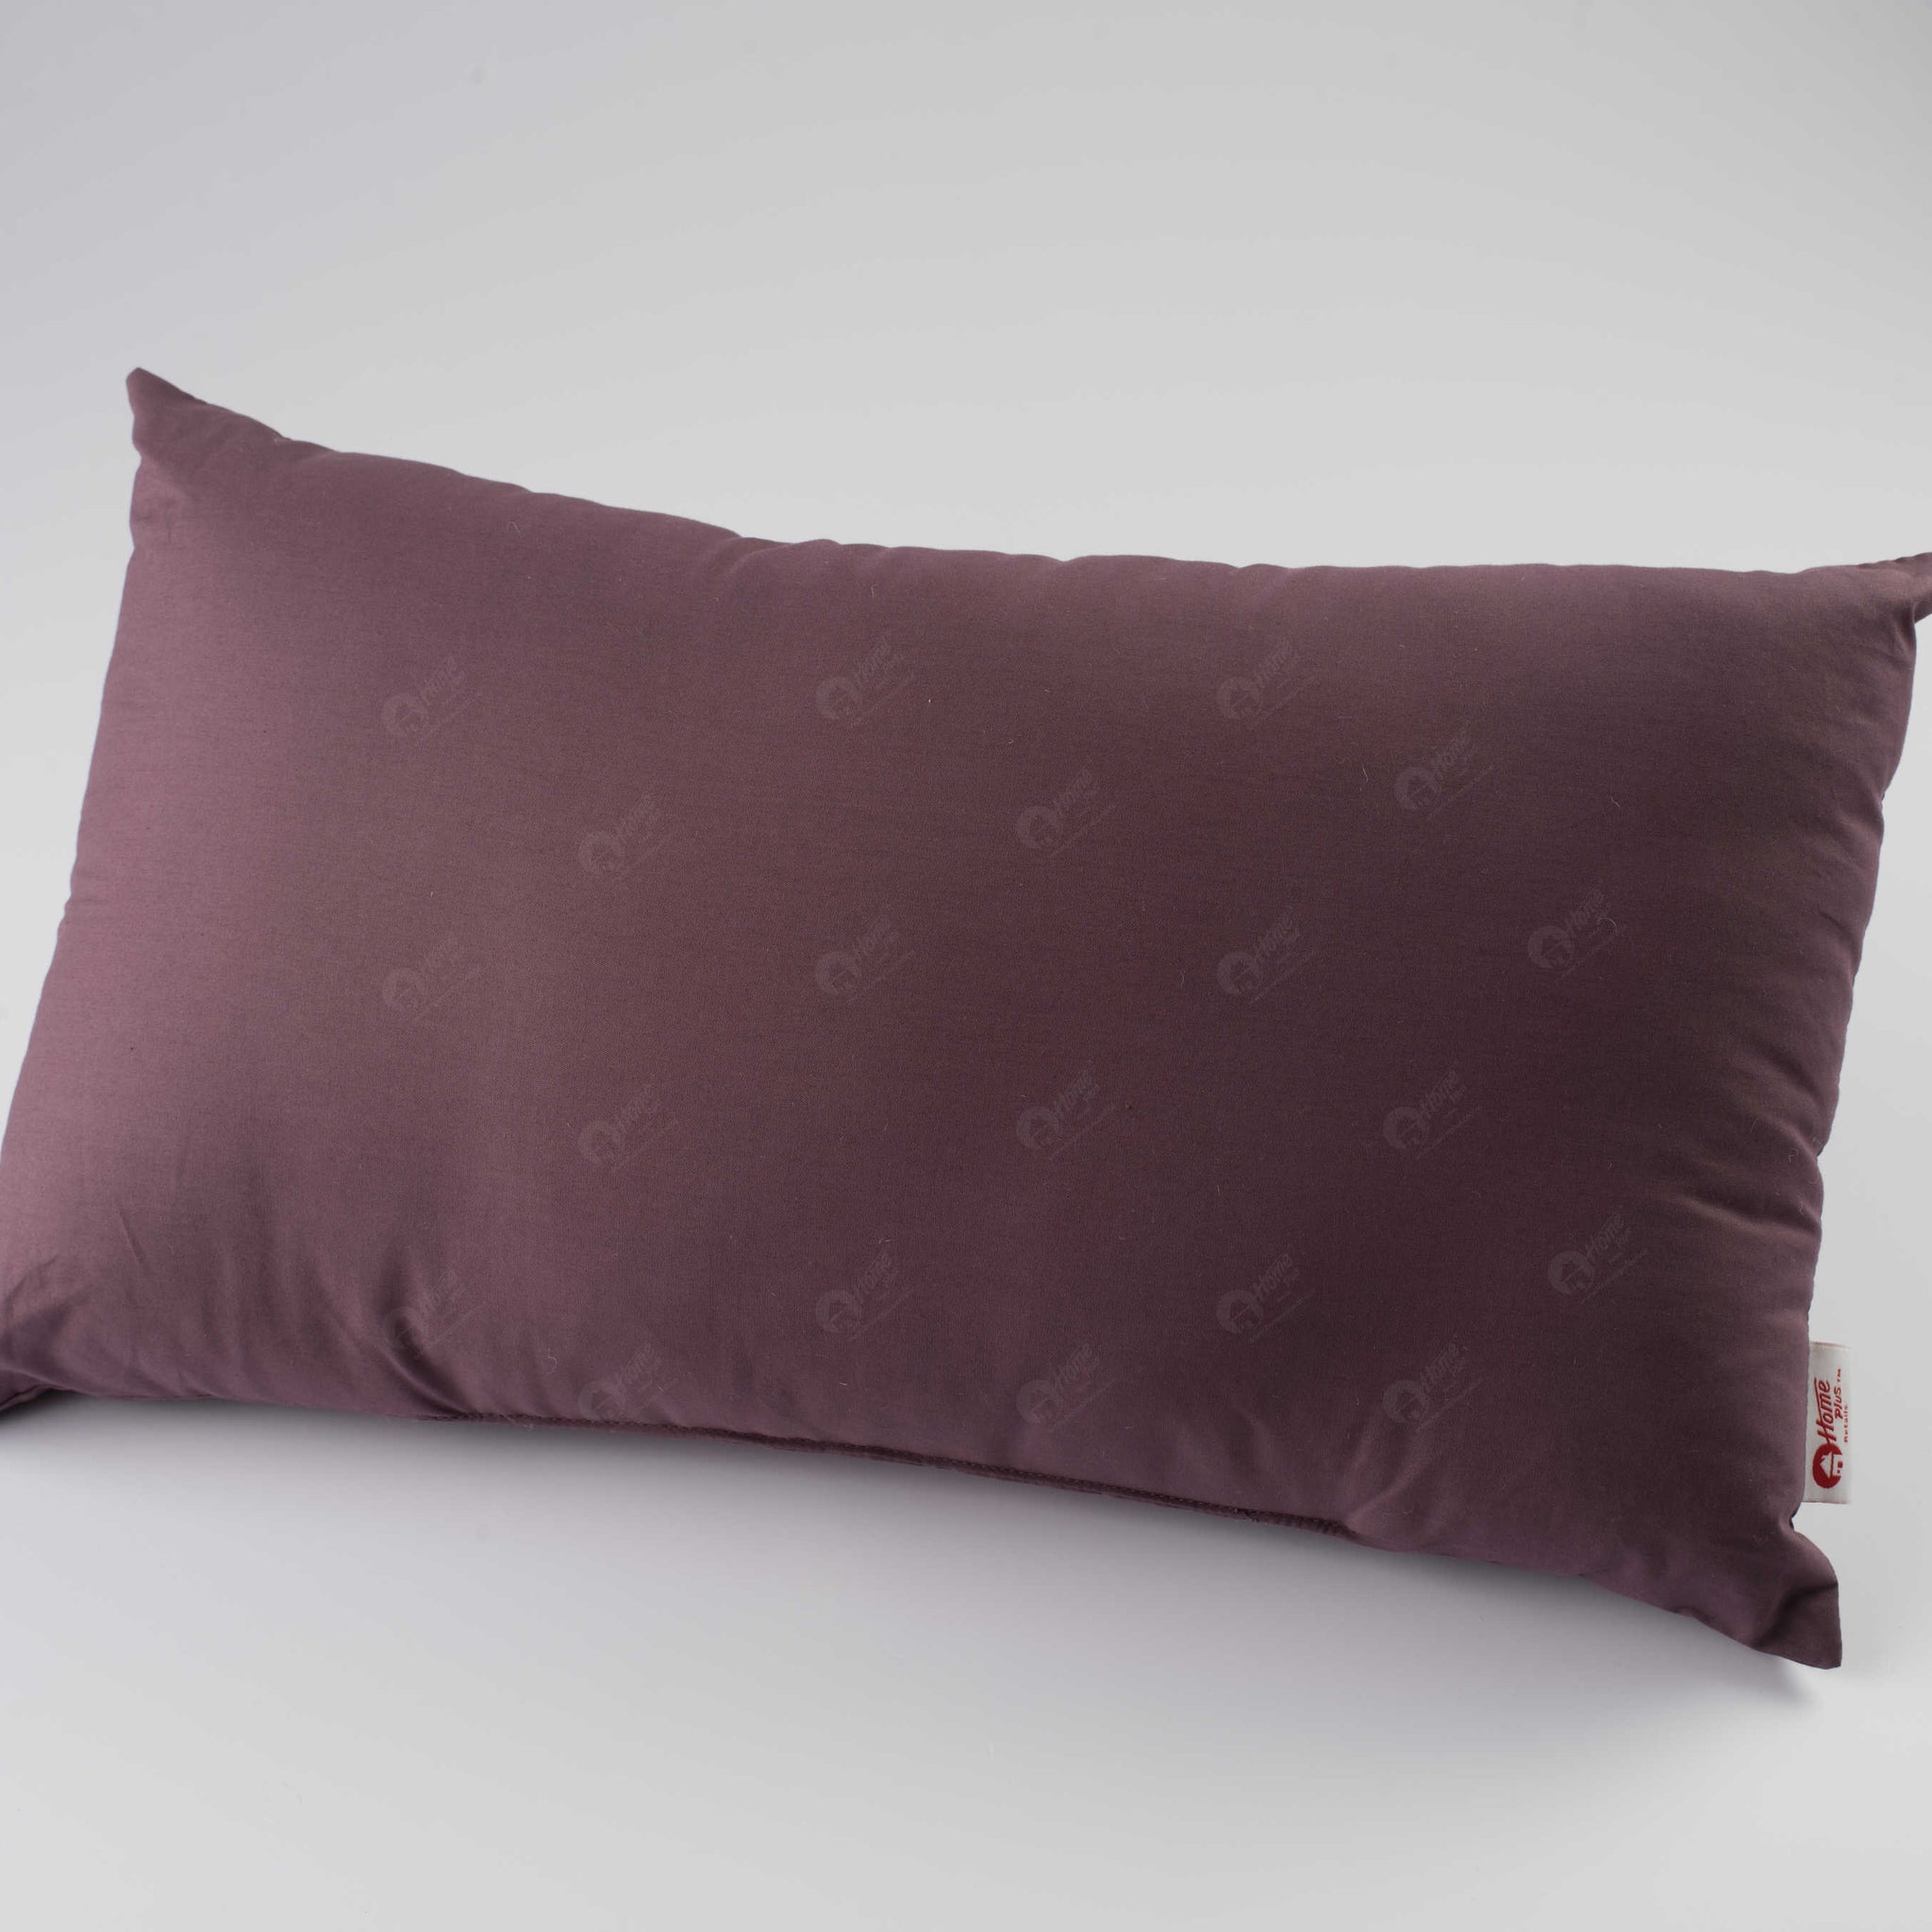 Pillow - Solid Grape